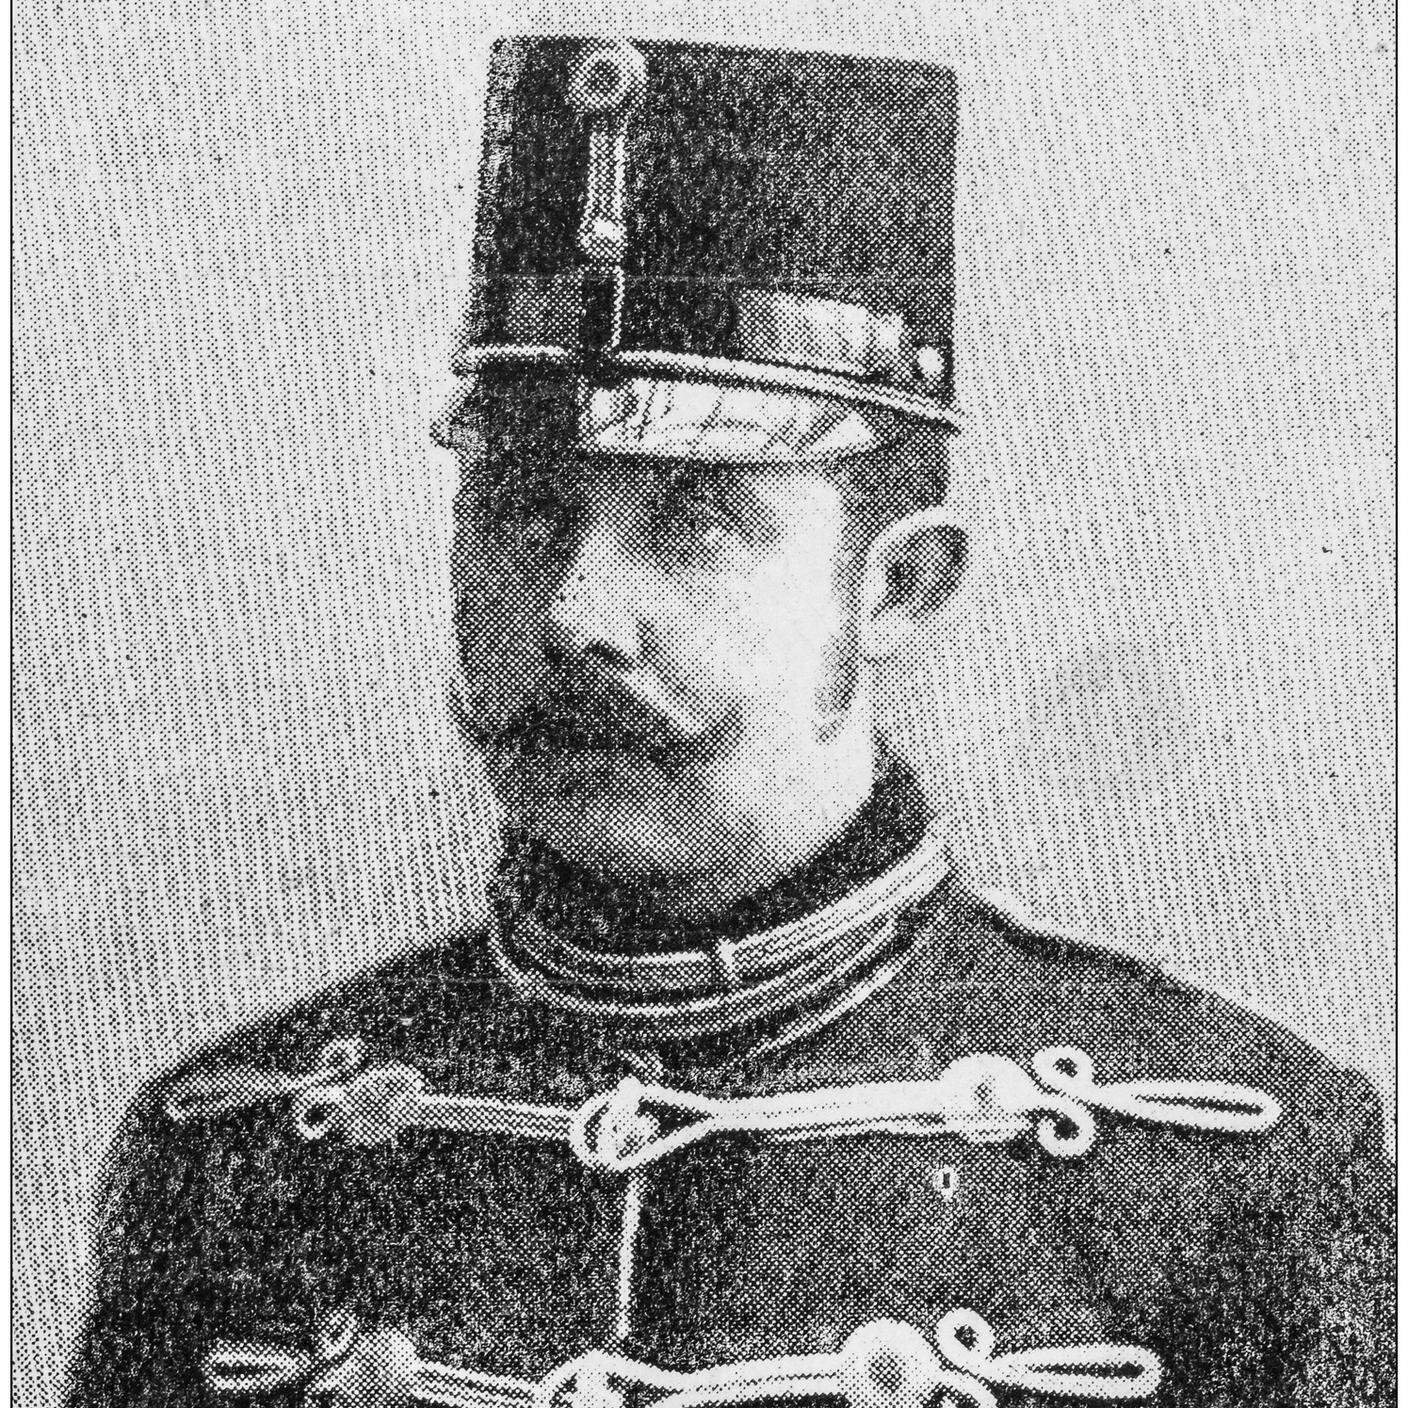 Francesco Ferdinando erede al trono dell’impero austro-ungarico